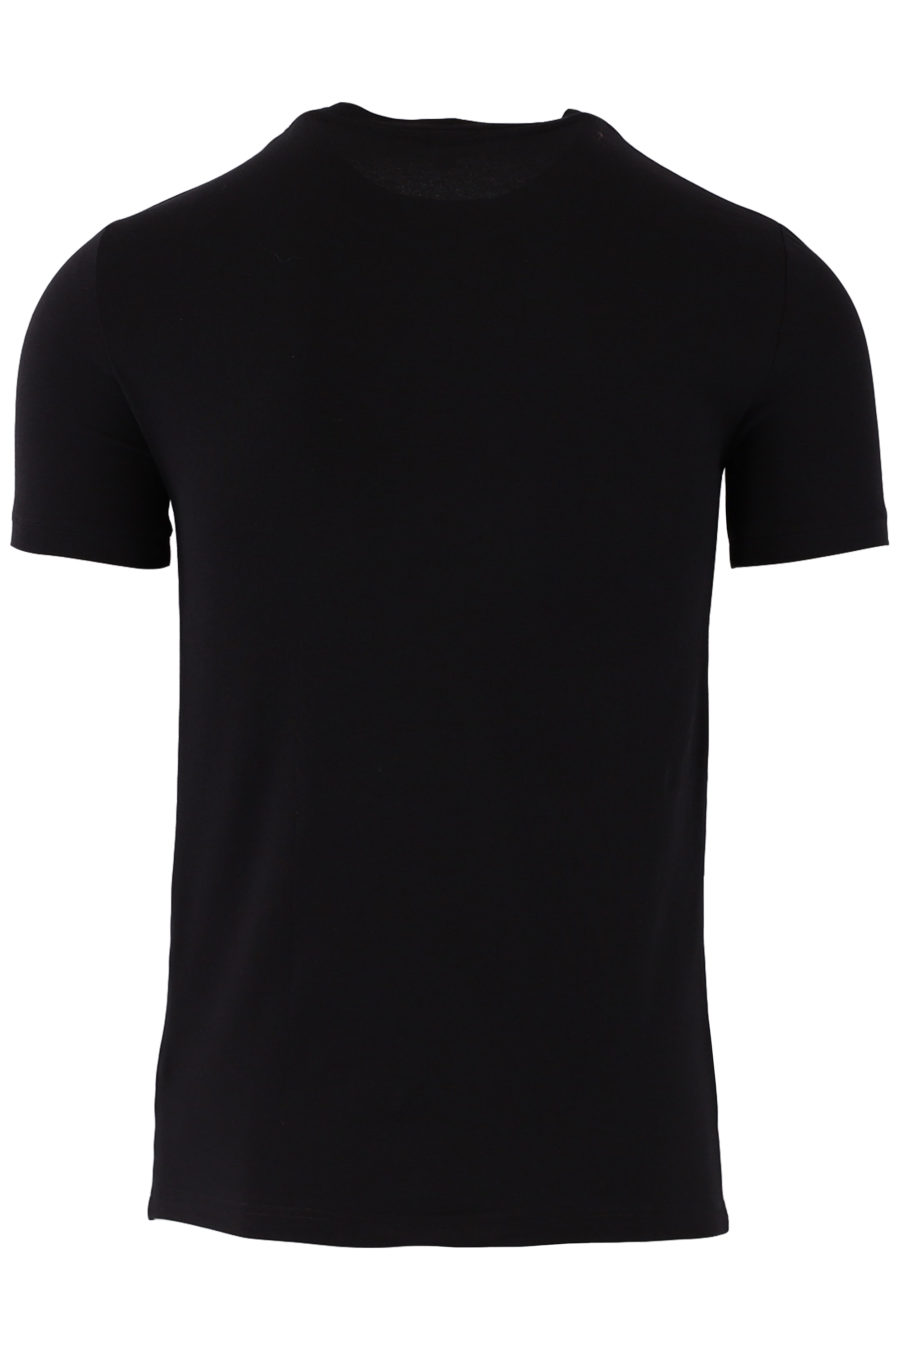 Camiseta interior negra con logo plateado bordado - b5b8486ef9d33322cbbfc1ea54059440b9c6f006